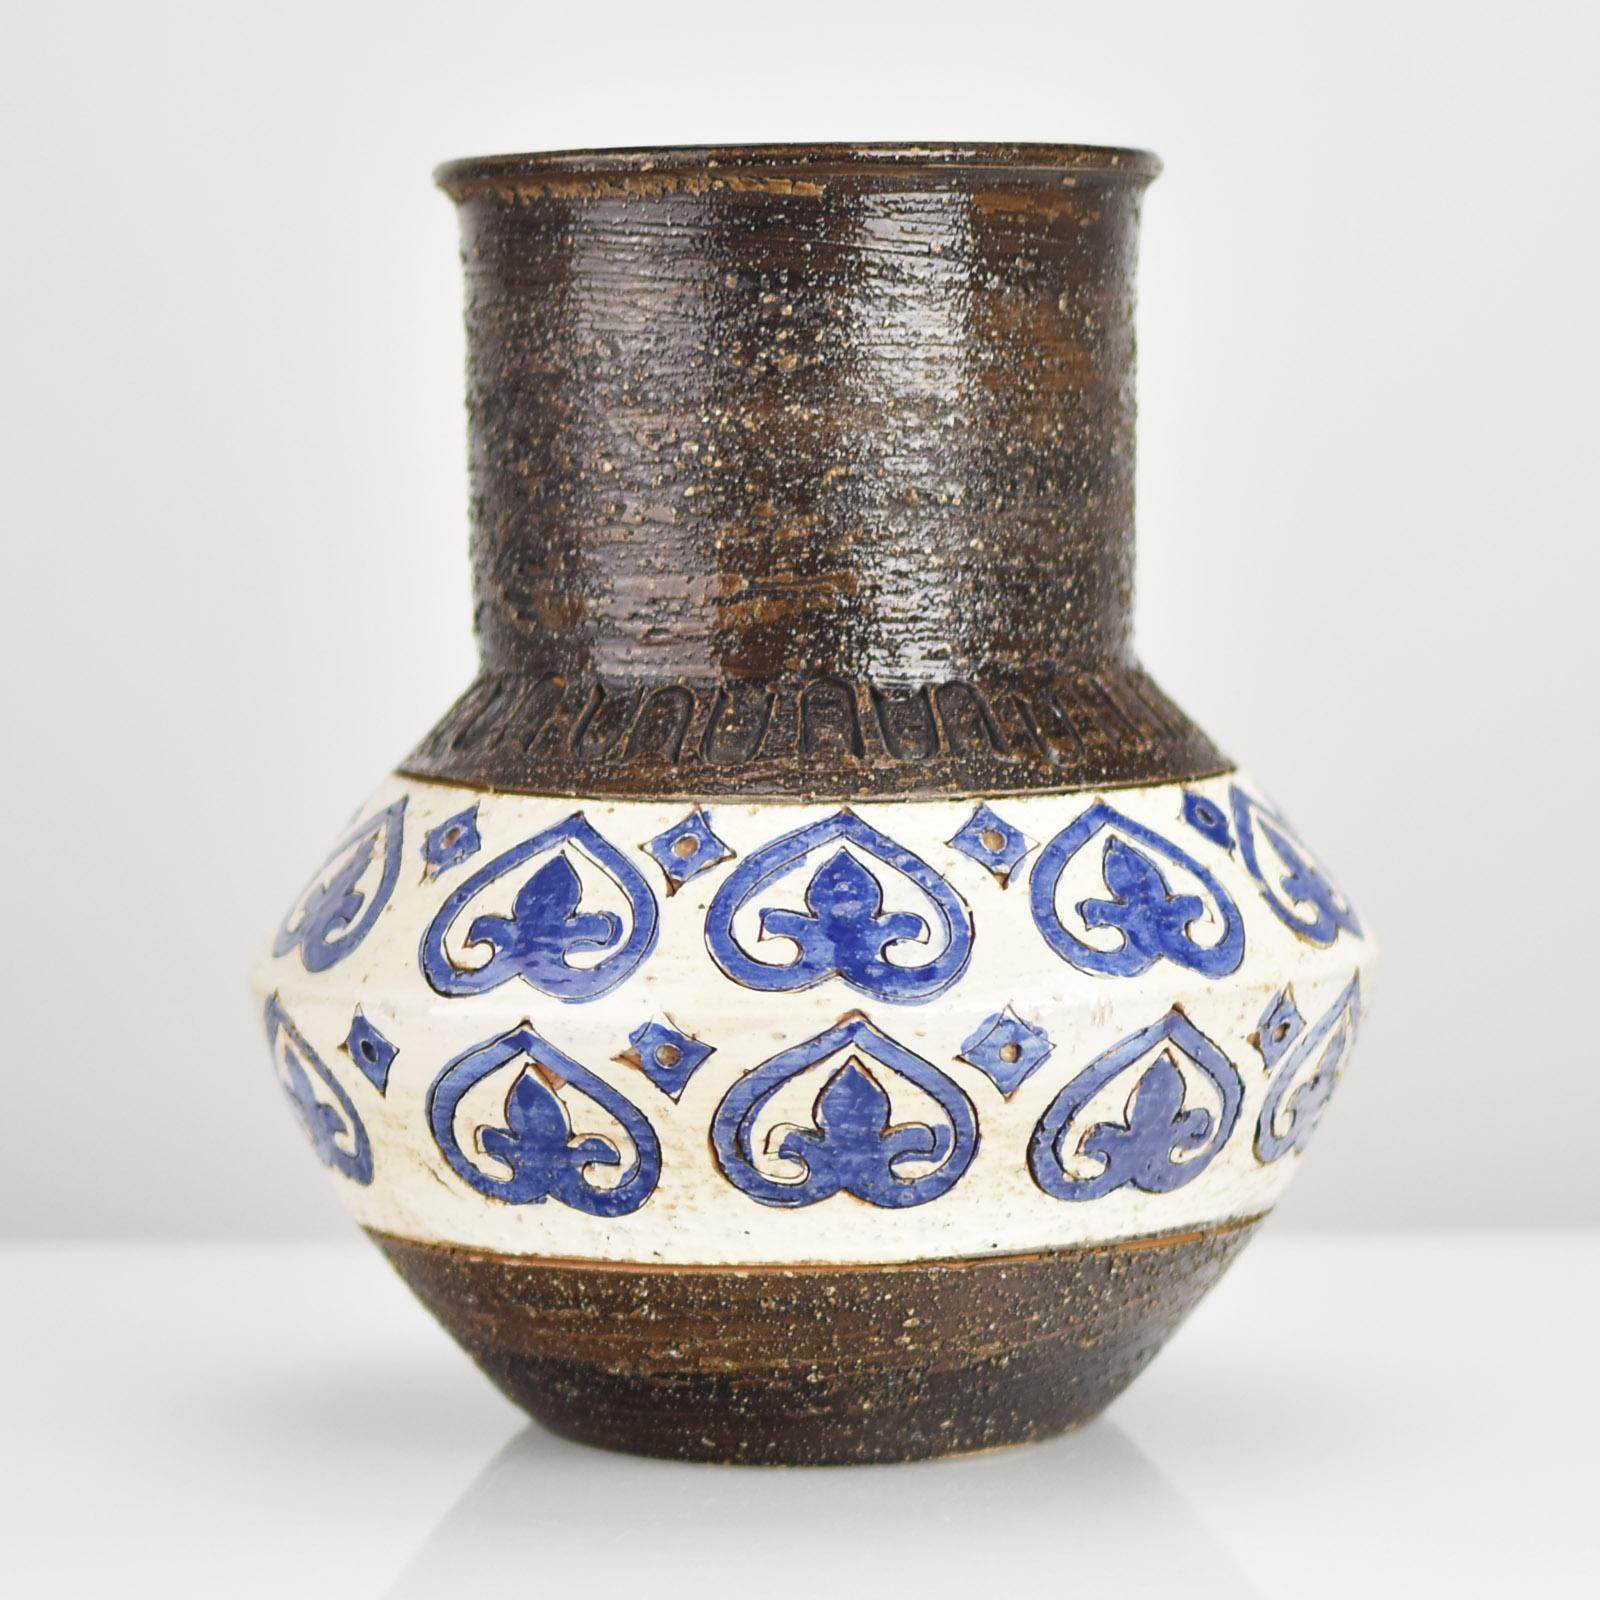 Rare vintage pottery vase designed by Aldo Londi for Bitossi.

Manufacturer: Bitossi
Design: Aldo Londi
height: ca. 20,4 cm / 8